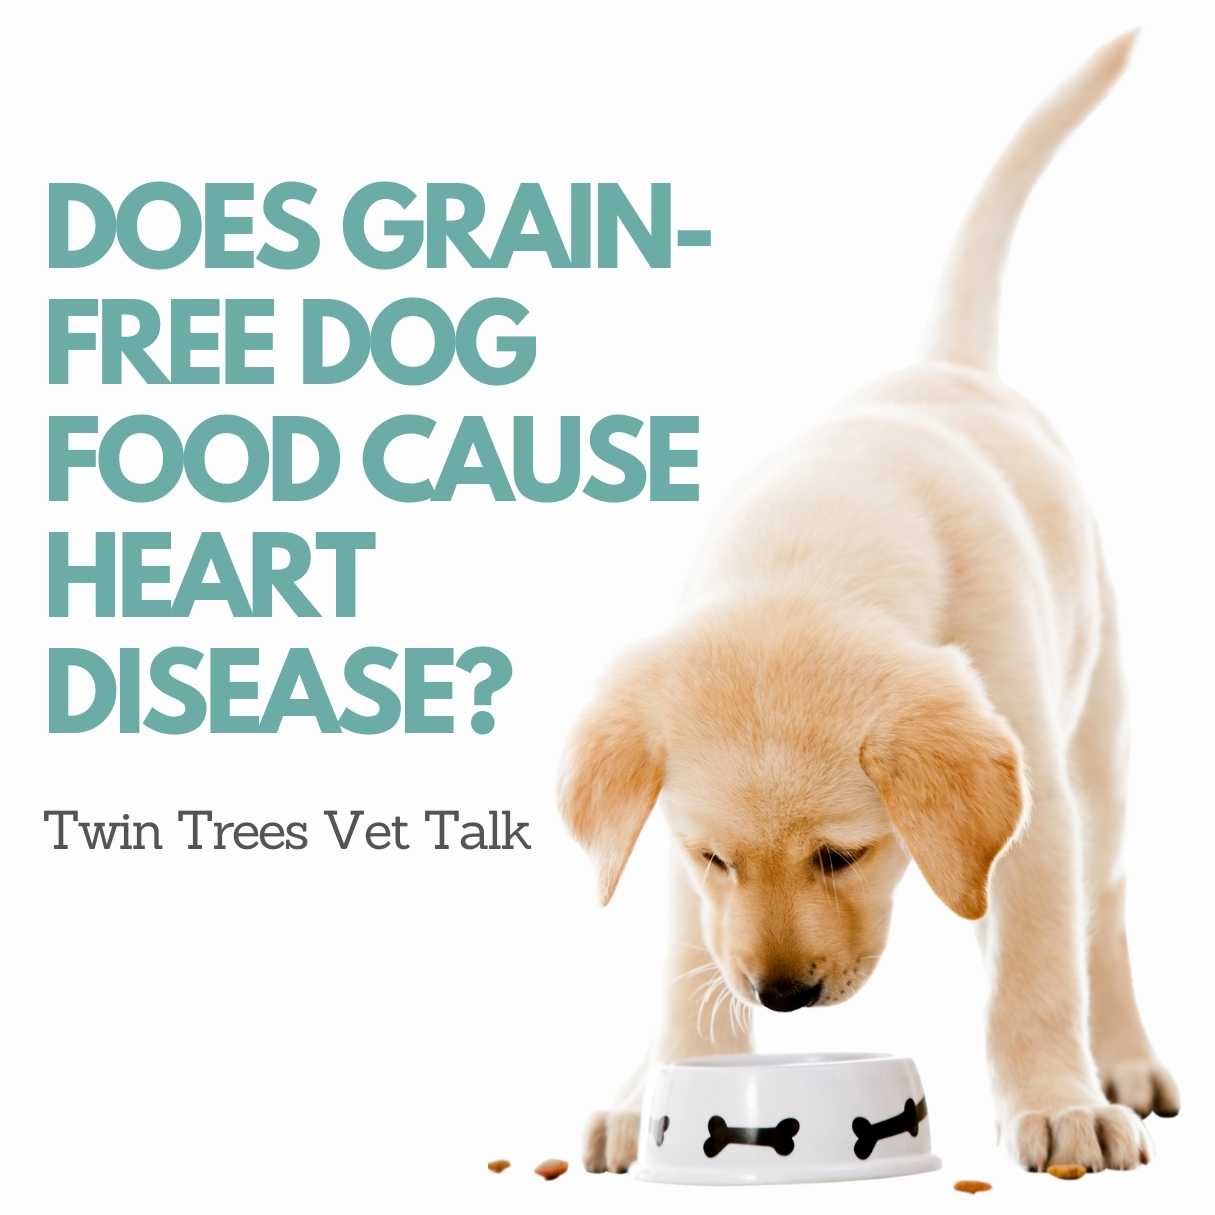 IT'S NOT OVER! Grain Free Dog Food & Heart Disease │ Twin Trees Vet Talk (FREE VET ADVICE PODCAST)